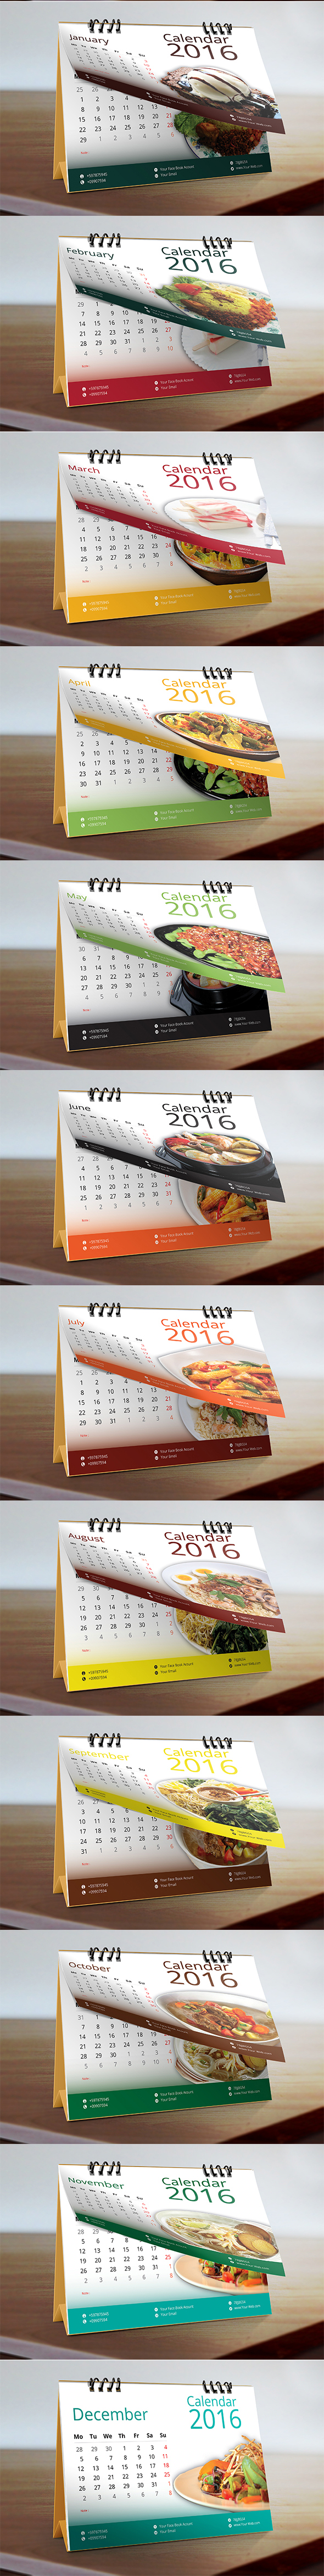 calendar calendar 2016 Culinary culinary calenda Food  culture dellicious date year new year romantic Day Computer design graphic